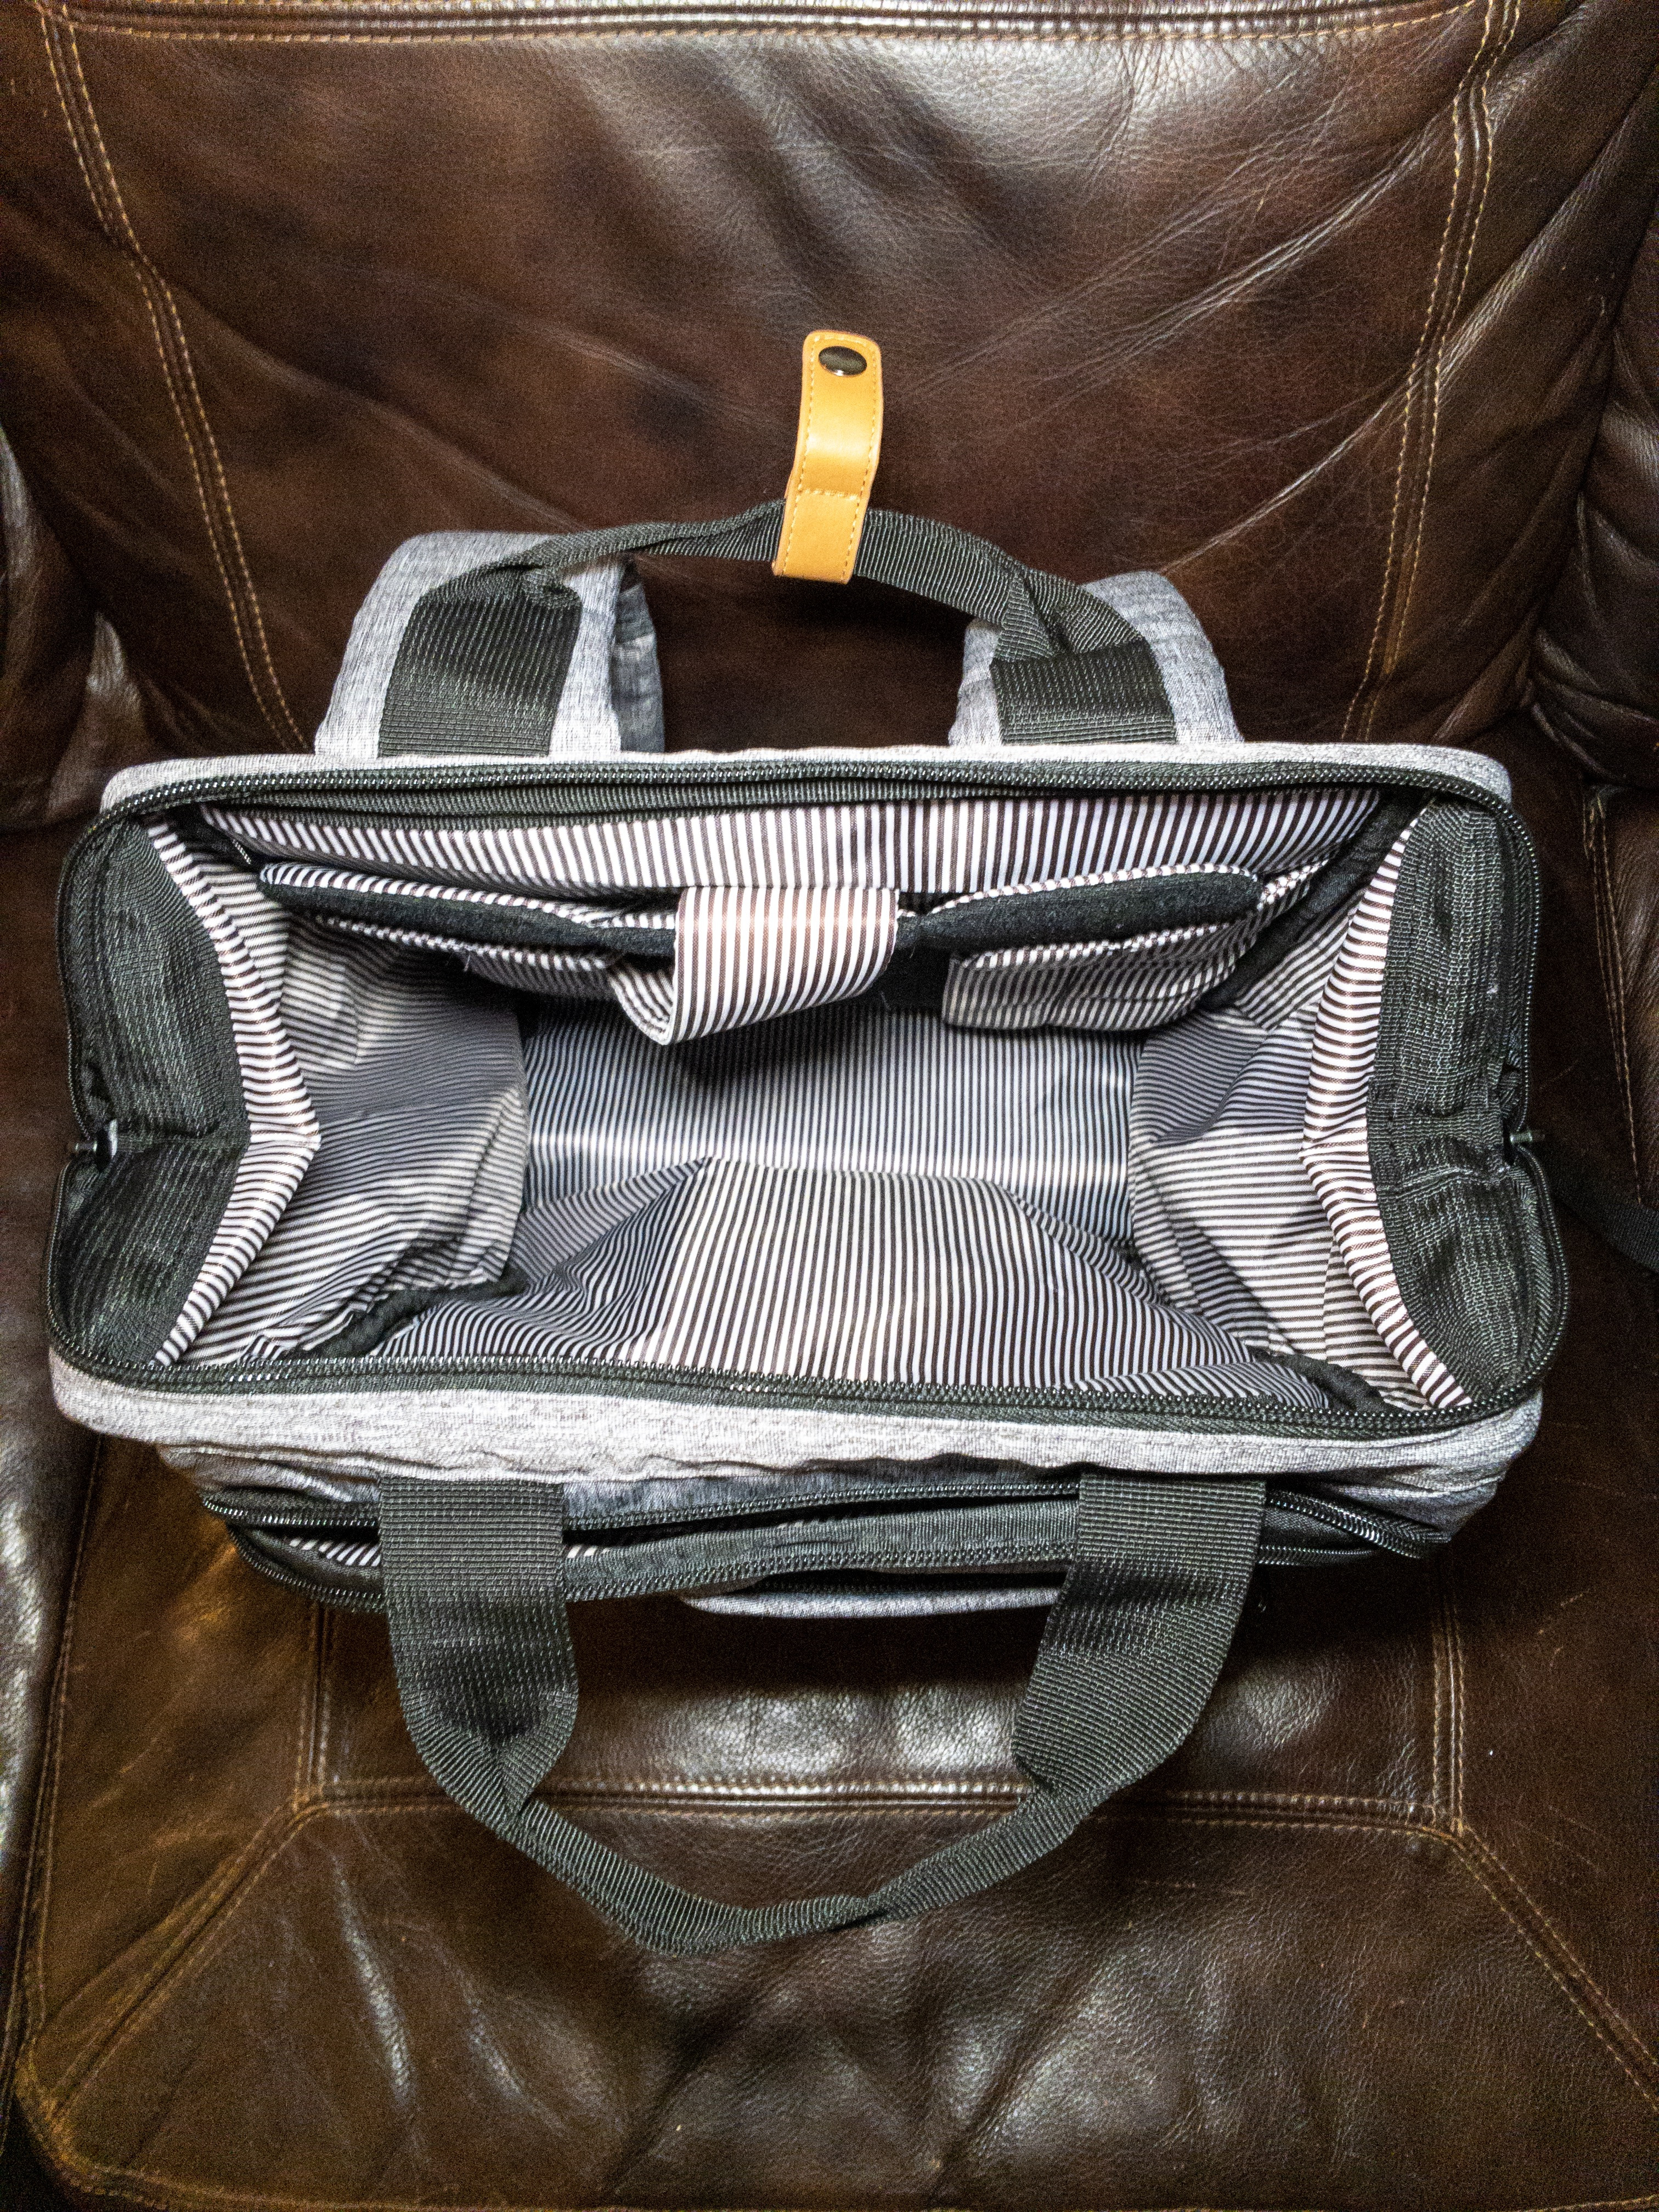 hap-tim-laptop-backpack-review-10.JPG